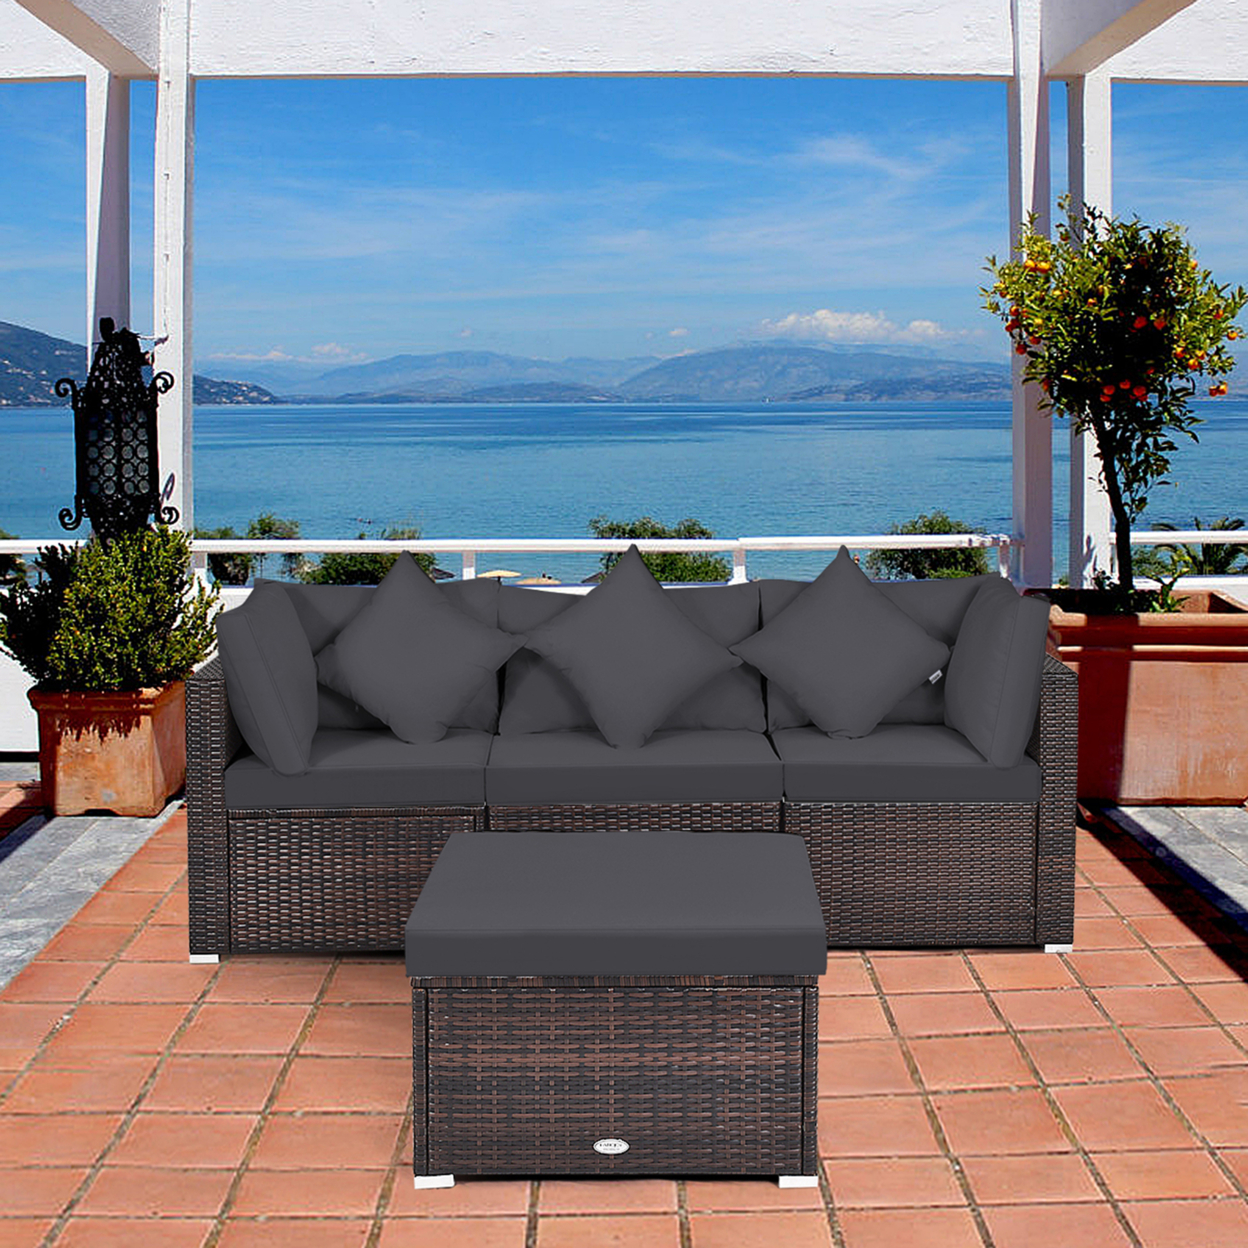 4PCS Rattan Patio Conversation Furniture Set Yard Outdoor W/ Grey Cushion